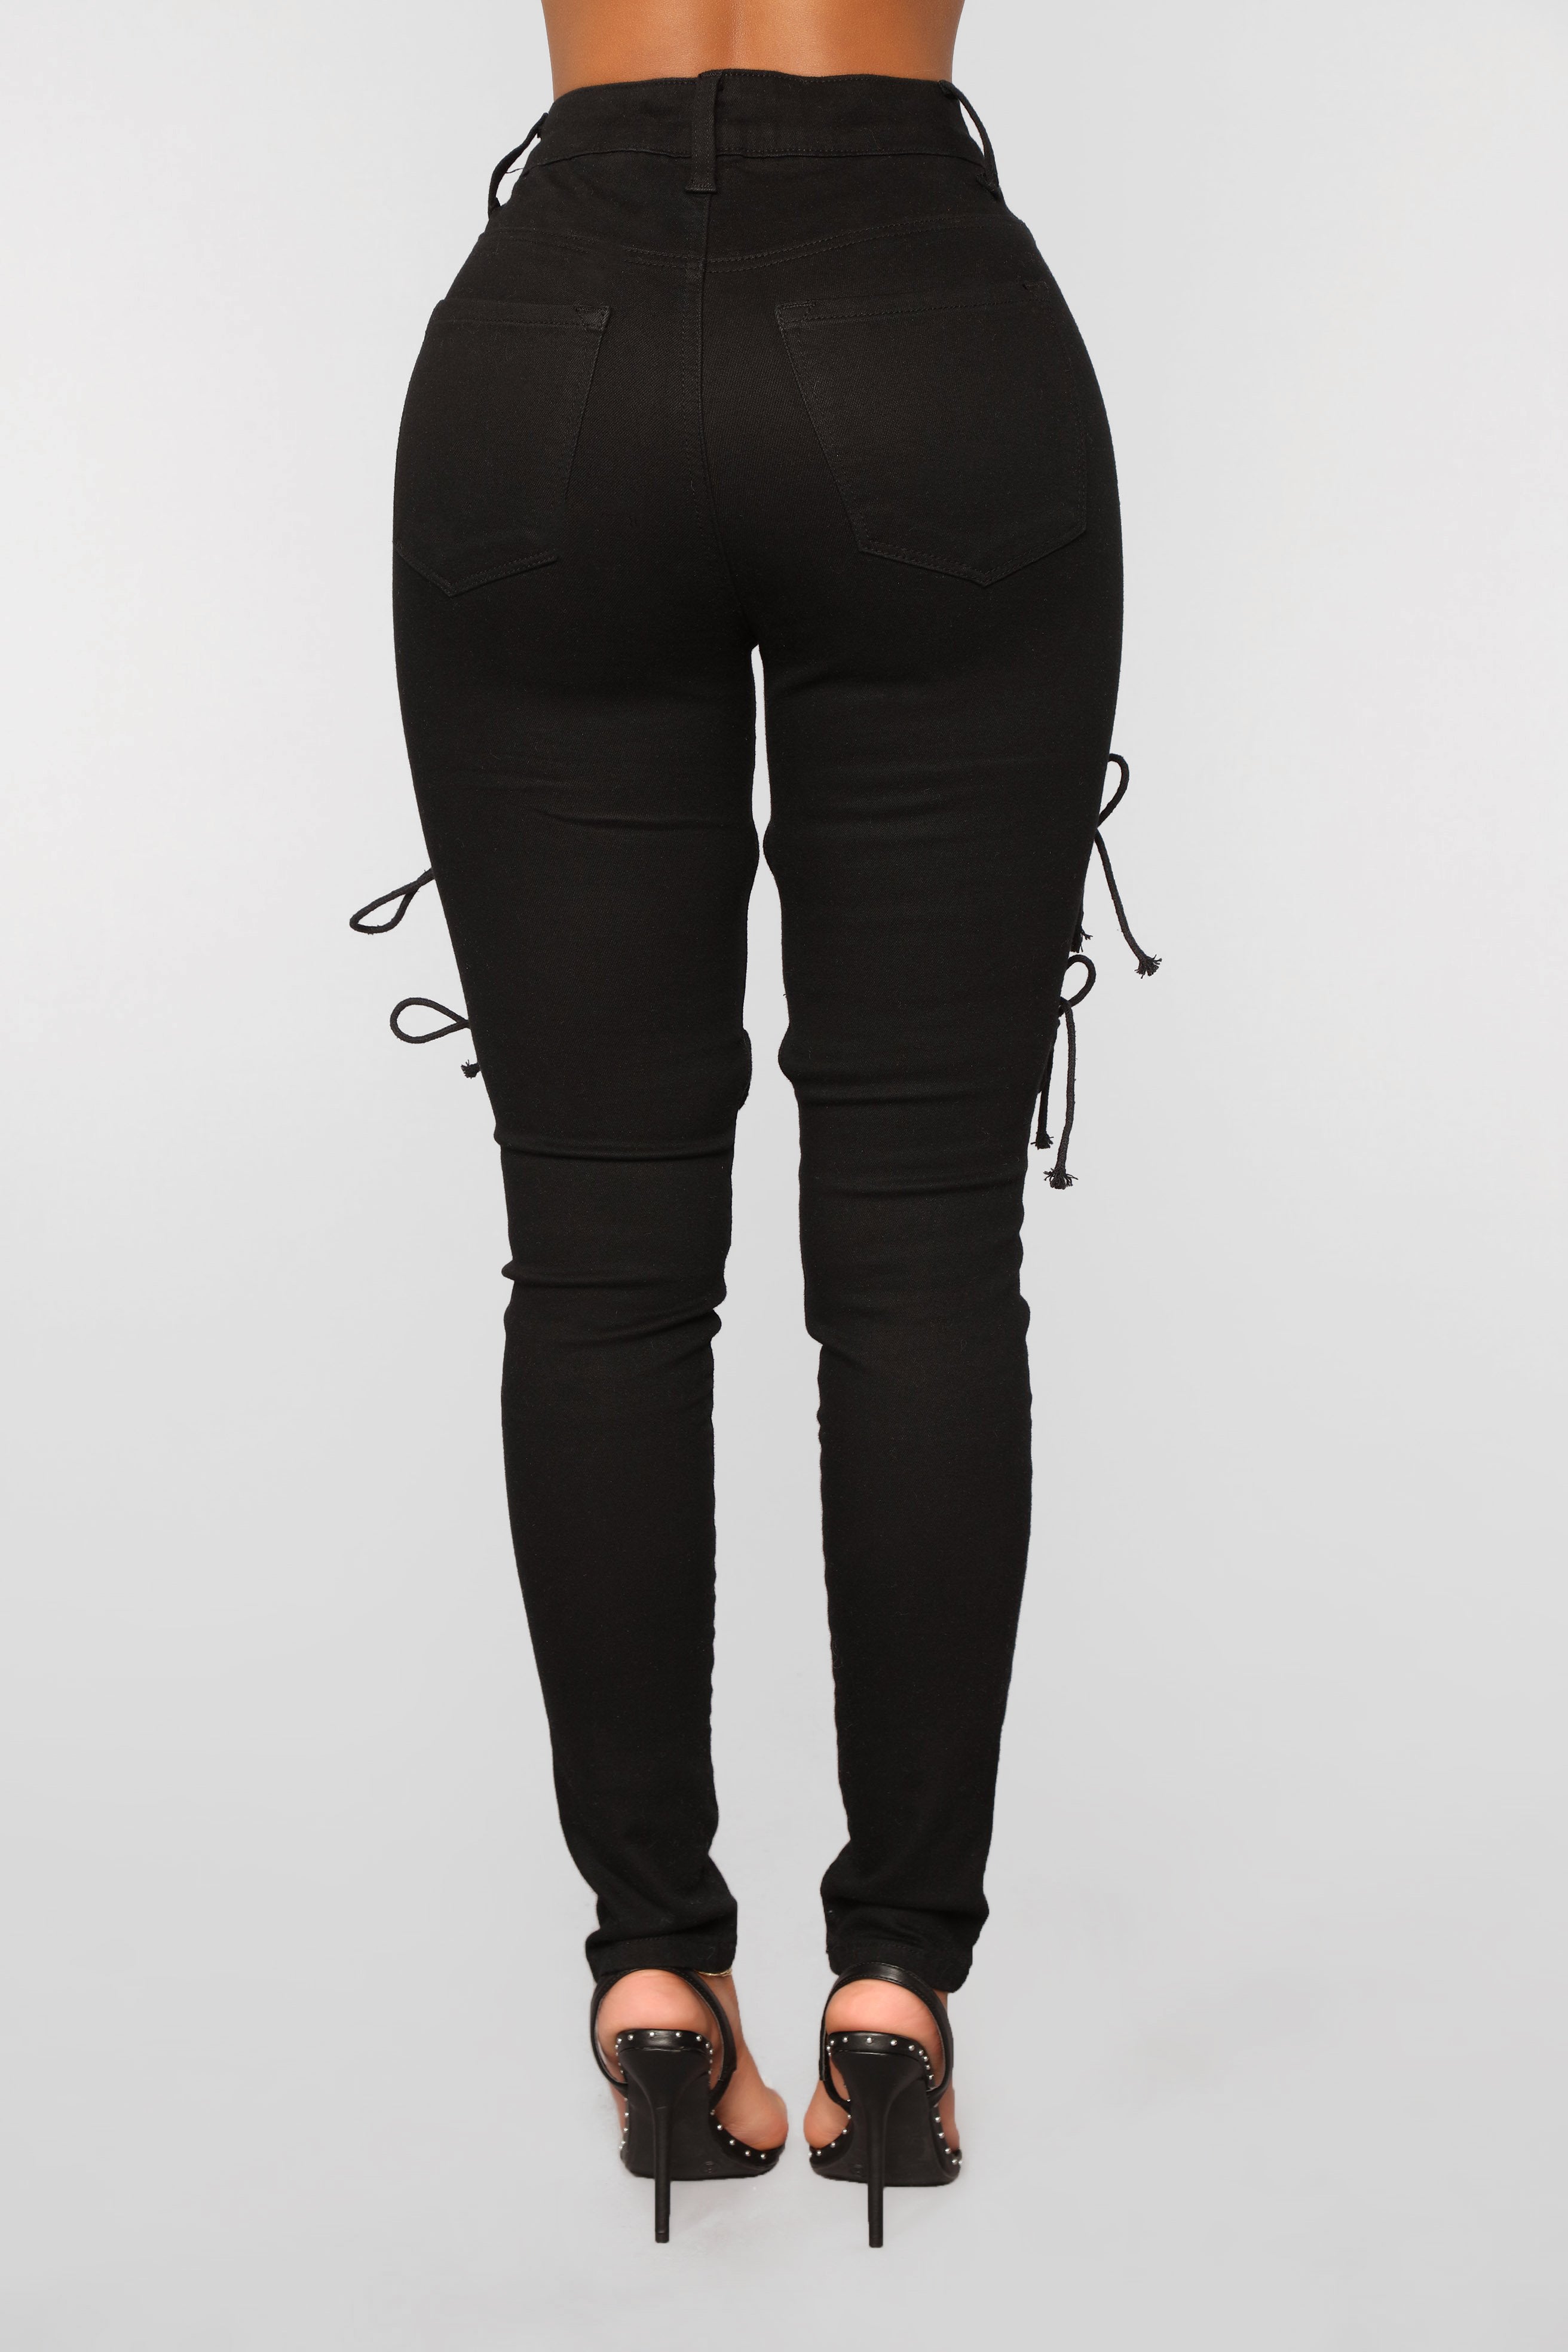 See Ya On The Flip Side Skinny Jeans - Black – InsStreet